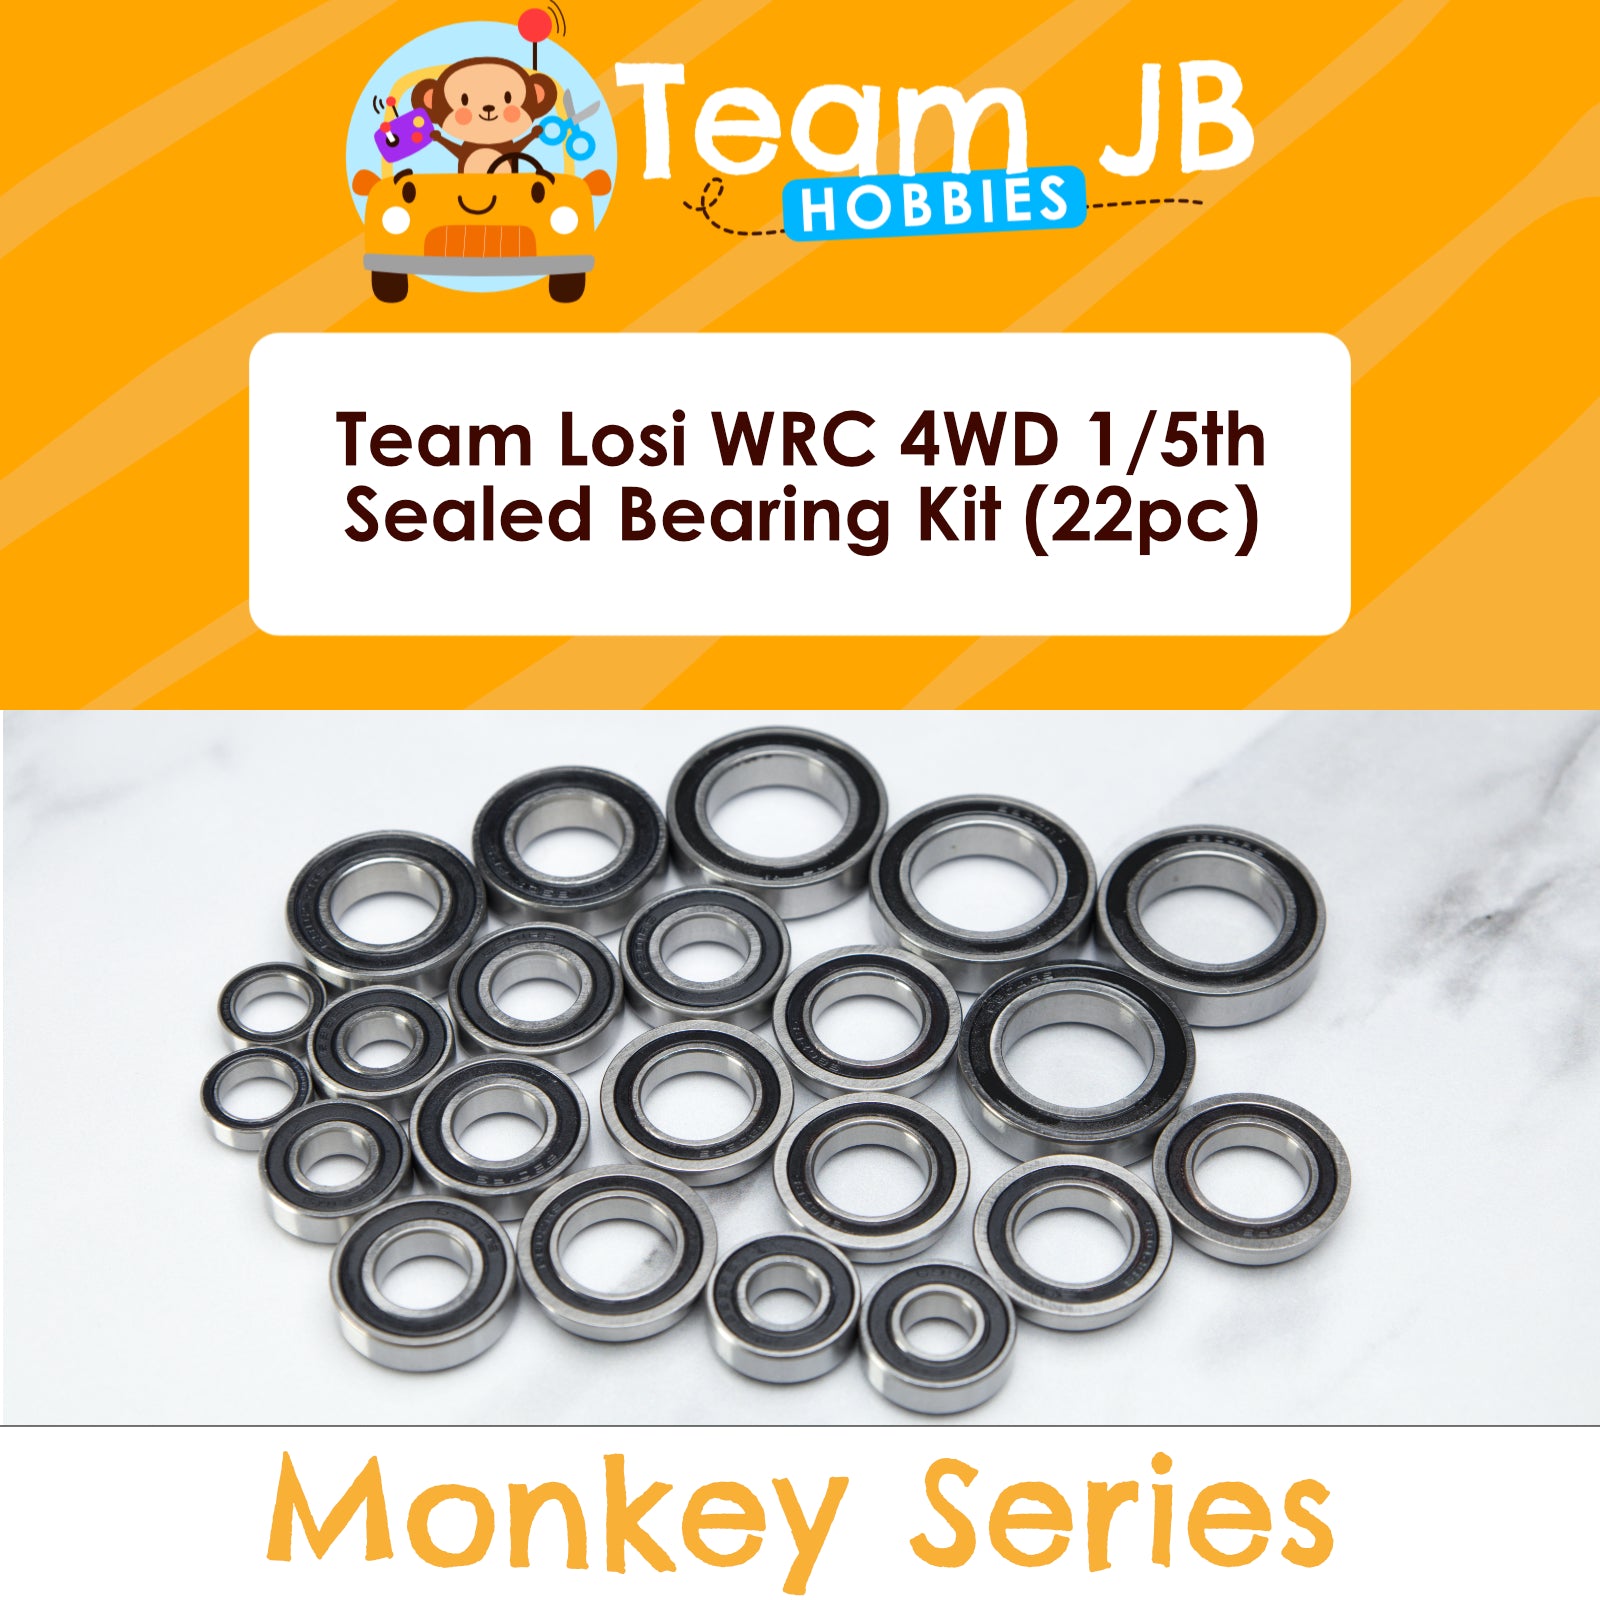 Team Losi WRC 4WD 1/5th - Sealed Bearing Kit